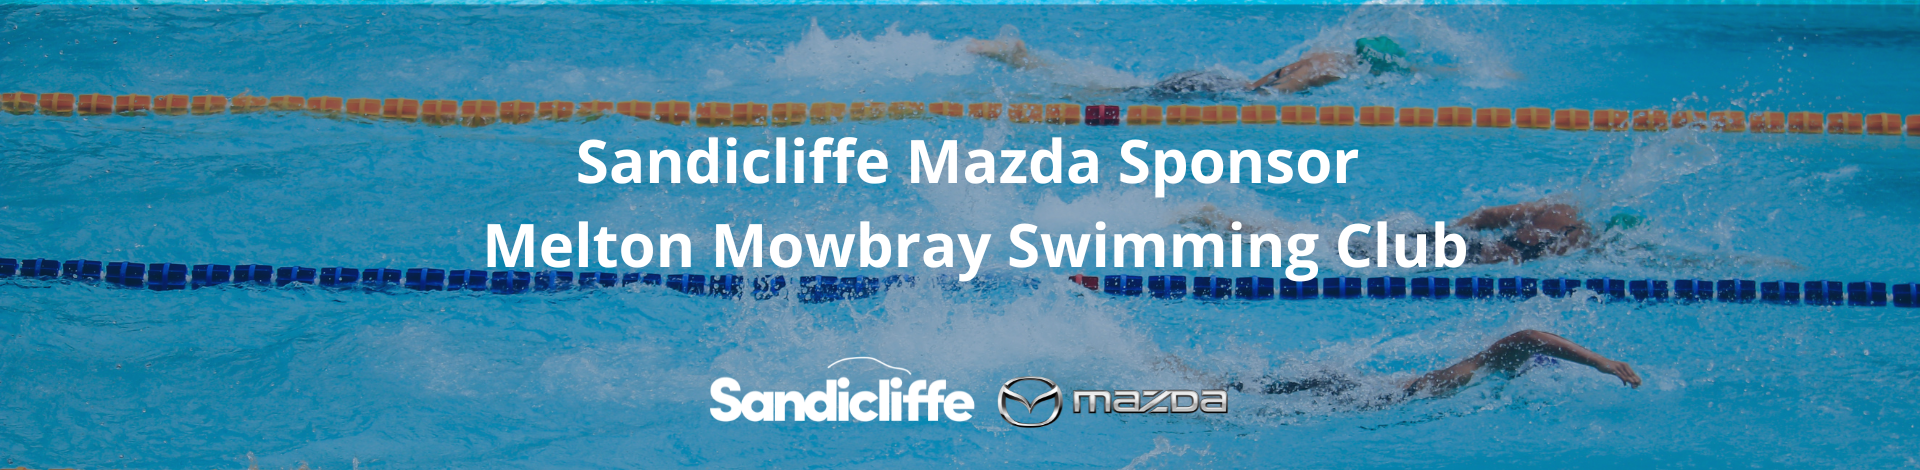 Sandicliffe Mazda Proudly Sponsors Melton Mowbray Swimming Club